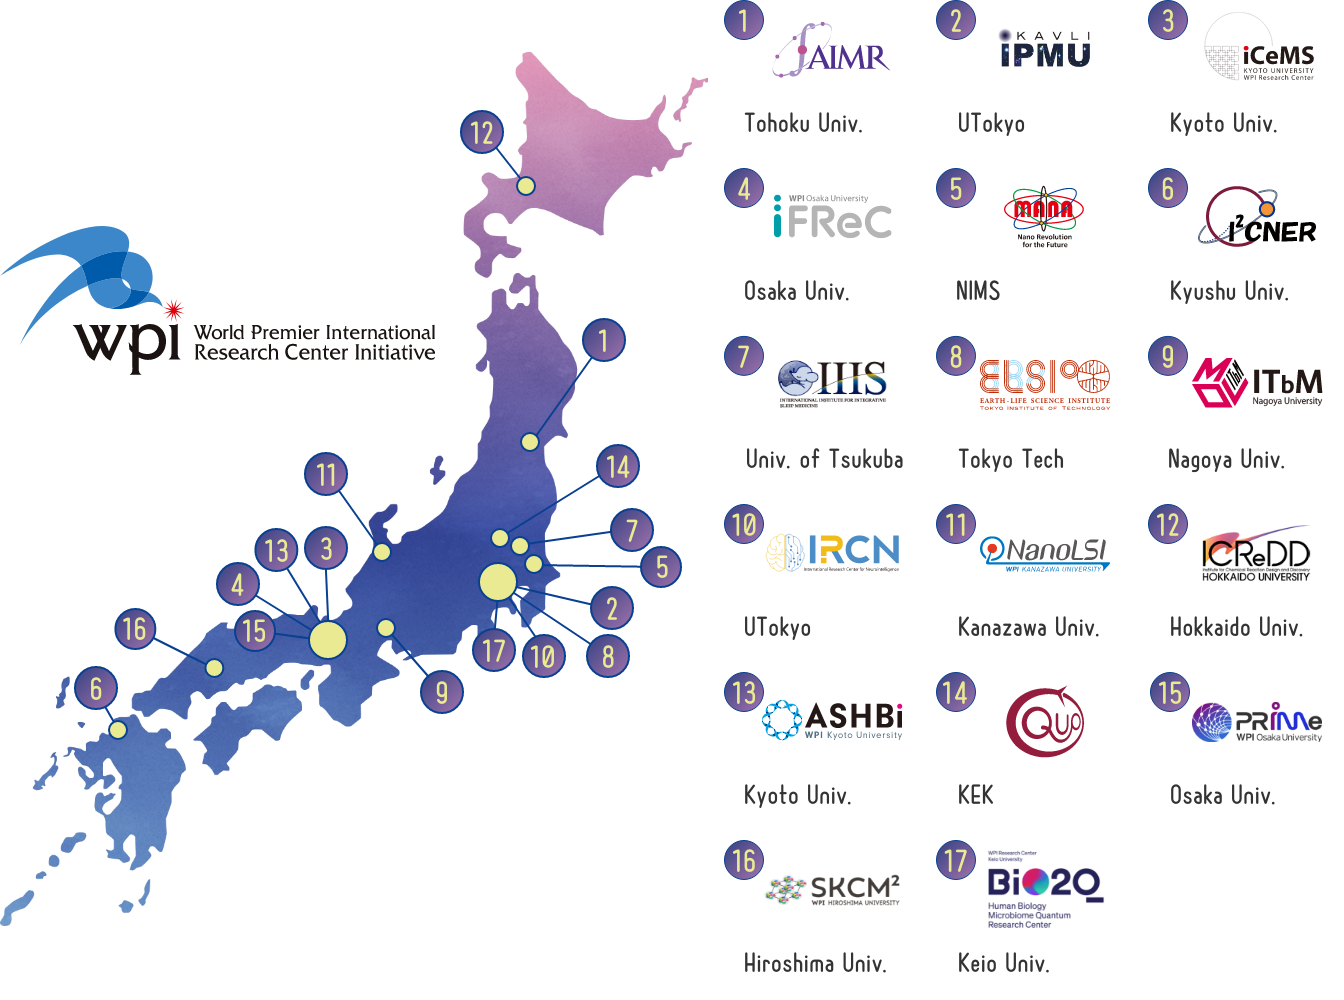 A total of  17 WPI centers have been established in Japan.